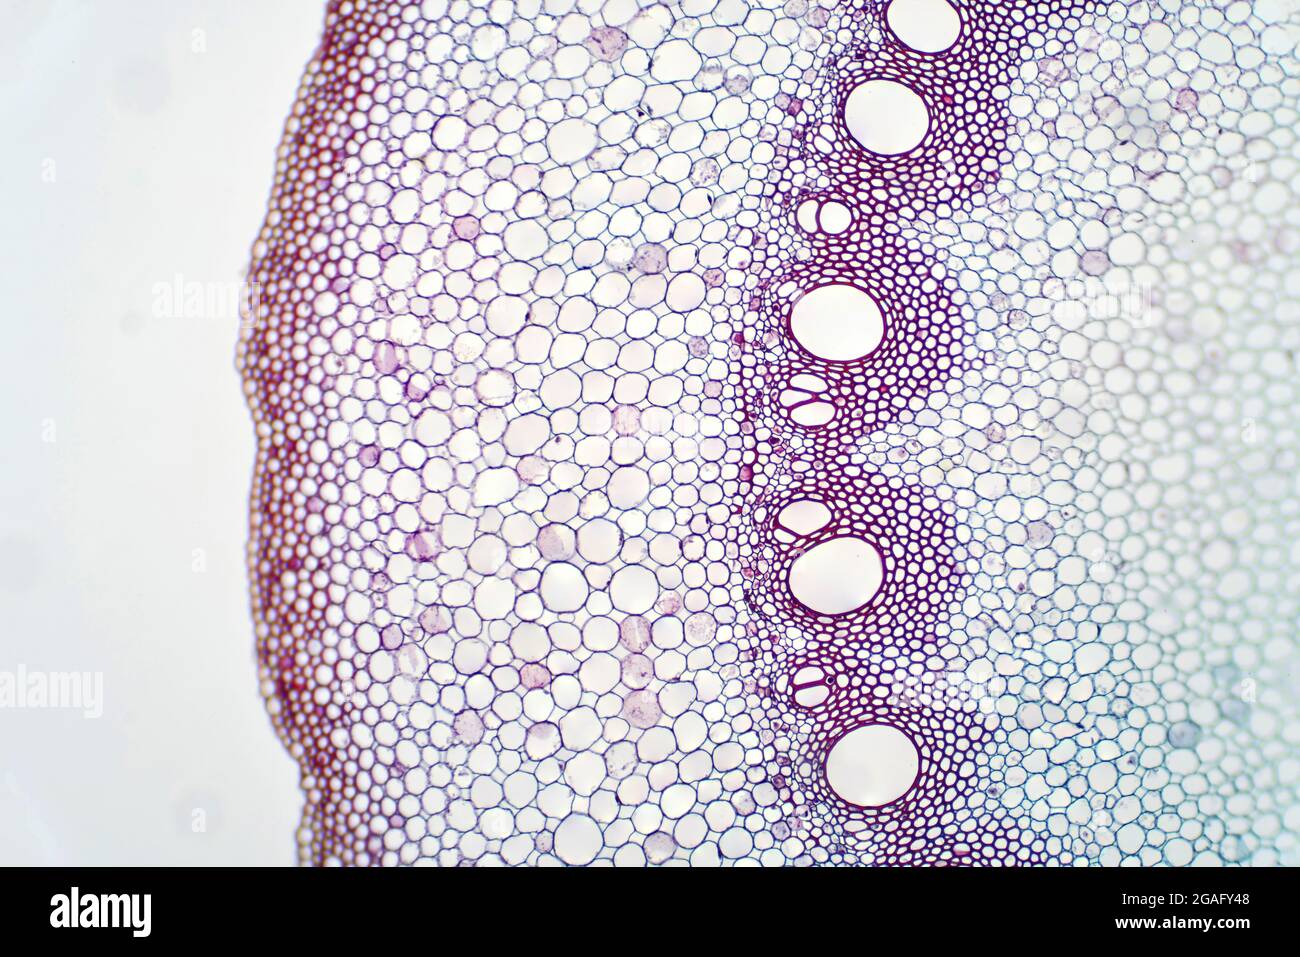 Root vascular tissue, light micrograph Stock Photo